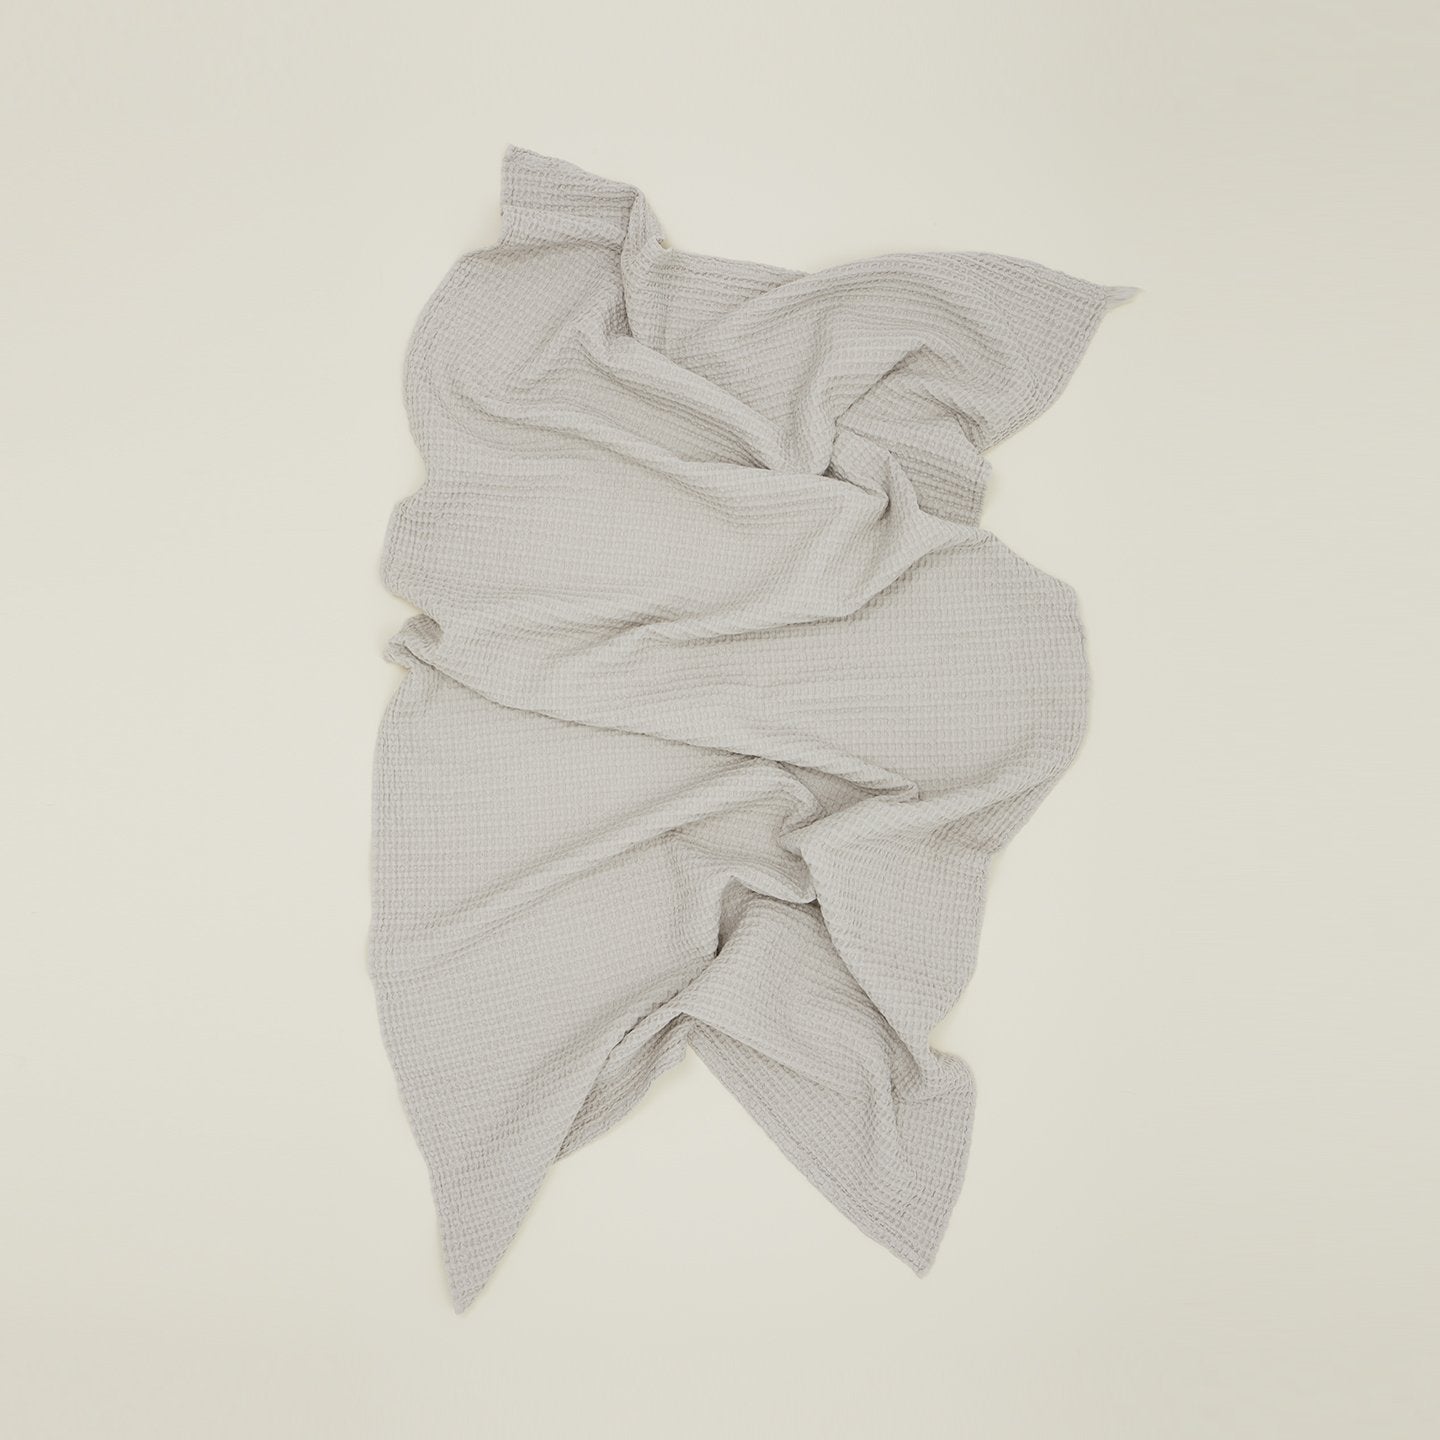 Hawkins New York Simple Waffle Towels - Dark Grey, Hand Towel